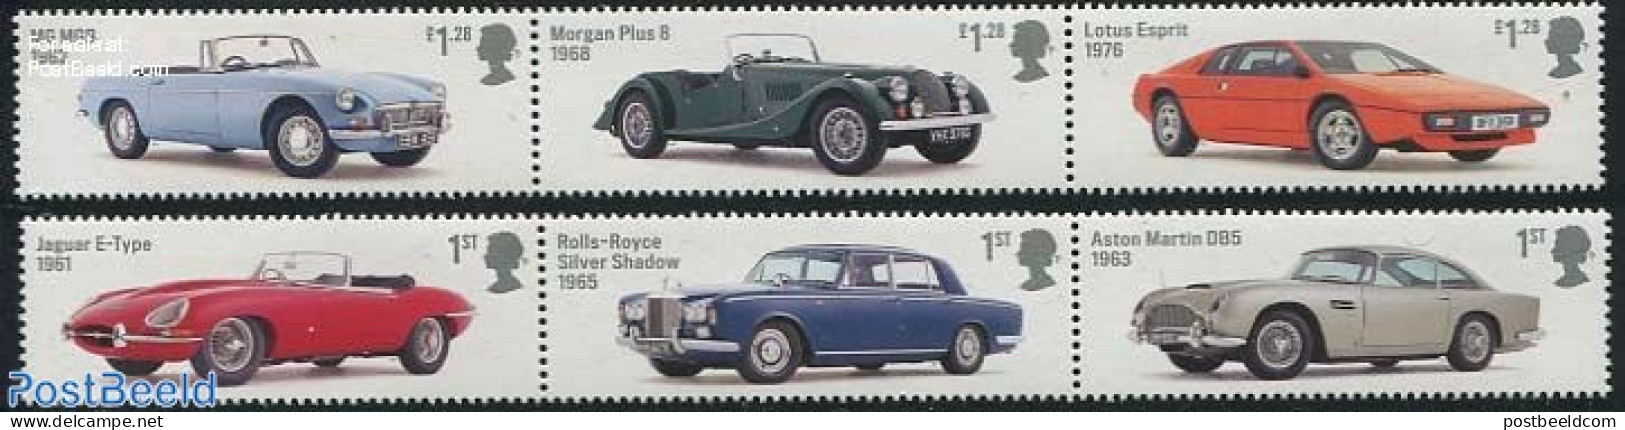 Great Britain 2013 British Automobiles 6v (2x[::]) (Jaguar E-type, Rolls-Royce Silver Shadow, Aston Martin DB5, MGB, M.. - Ongebruikt